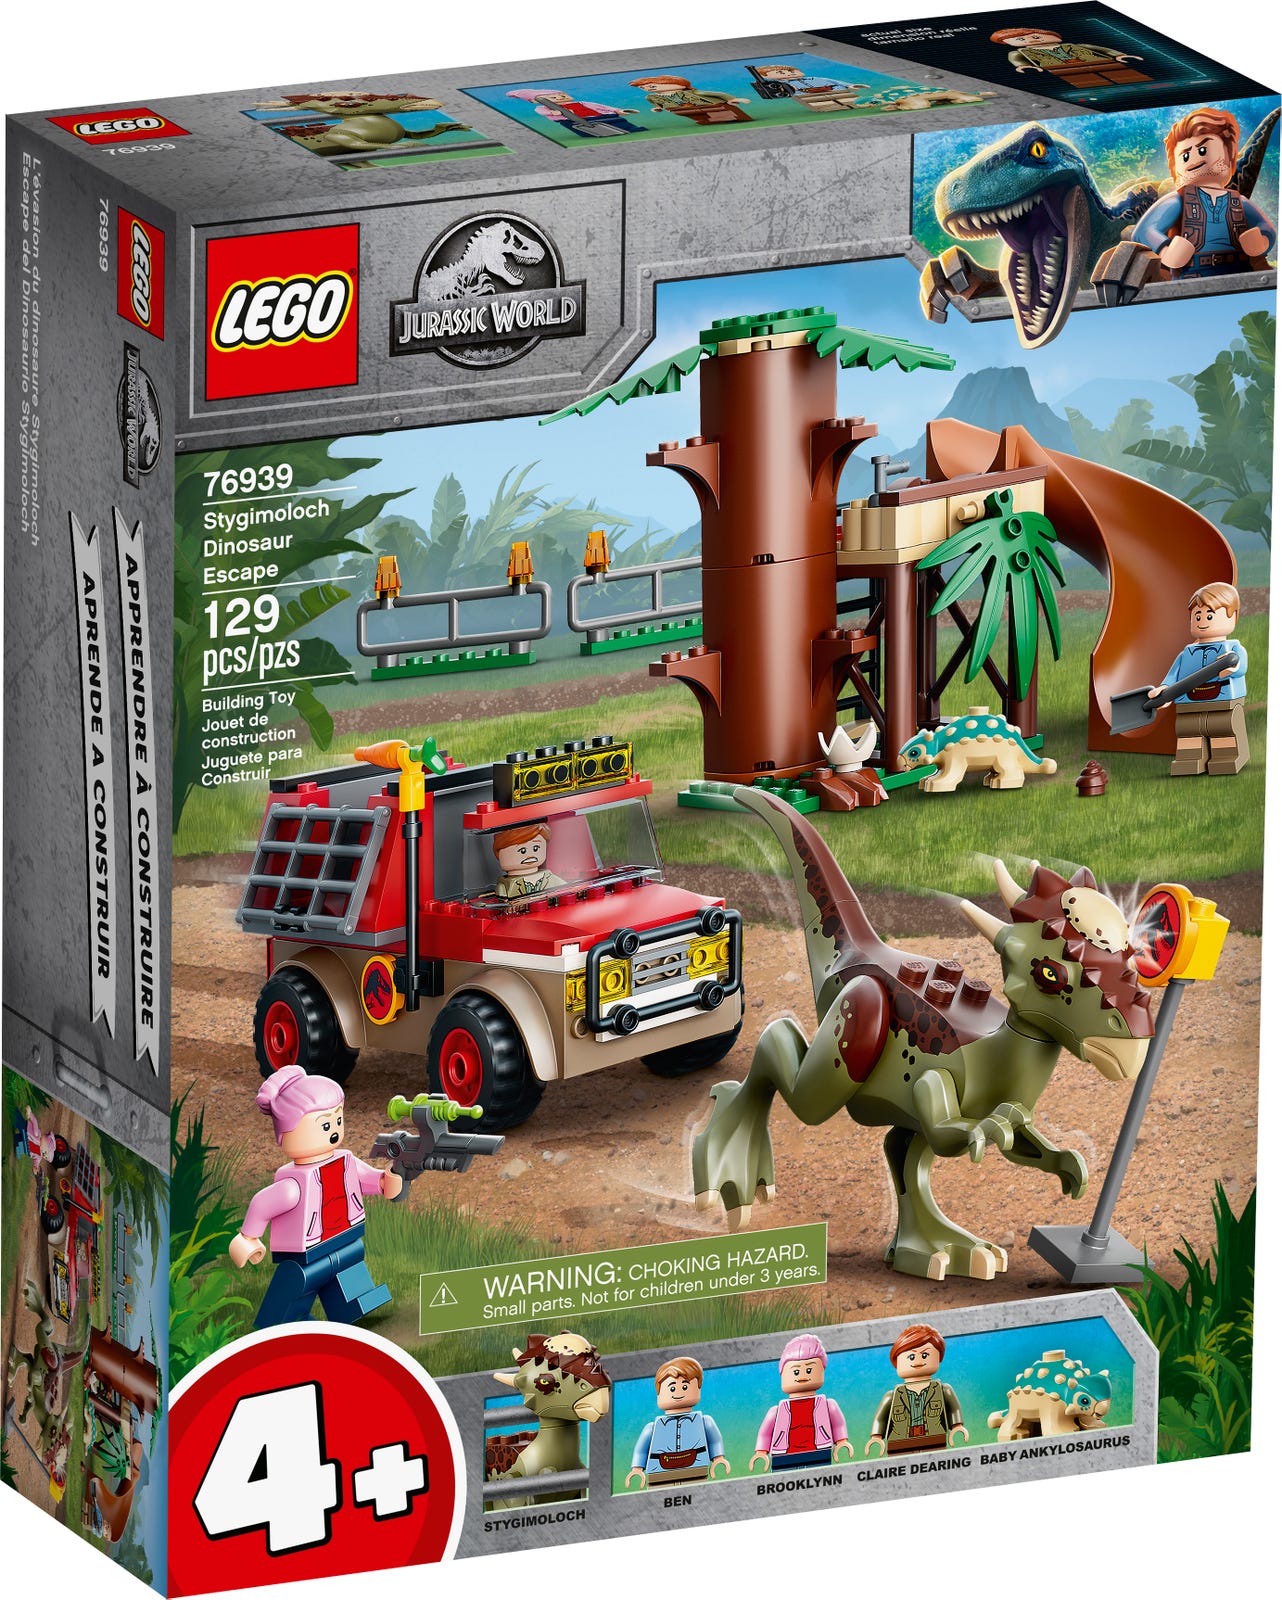 Lego Jurassic World Stygimoloch Dinosaur Escape 76939